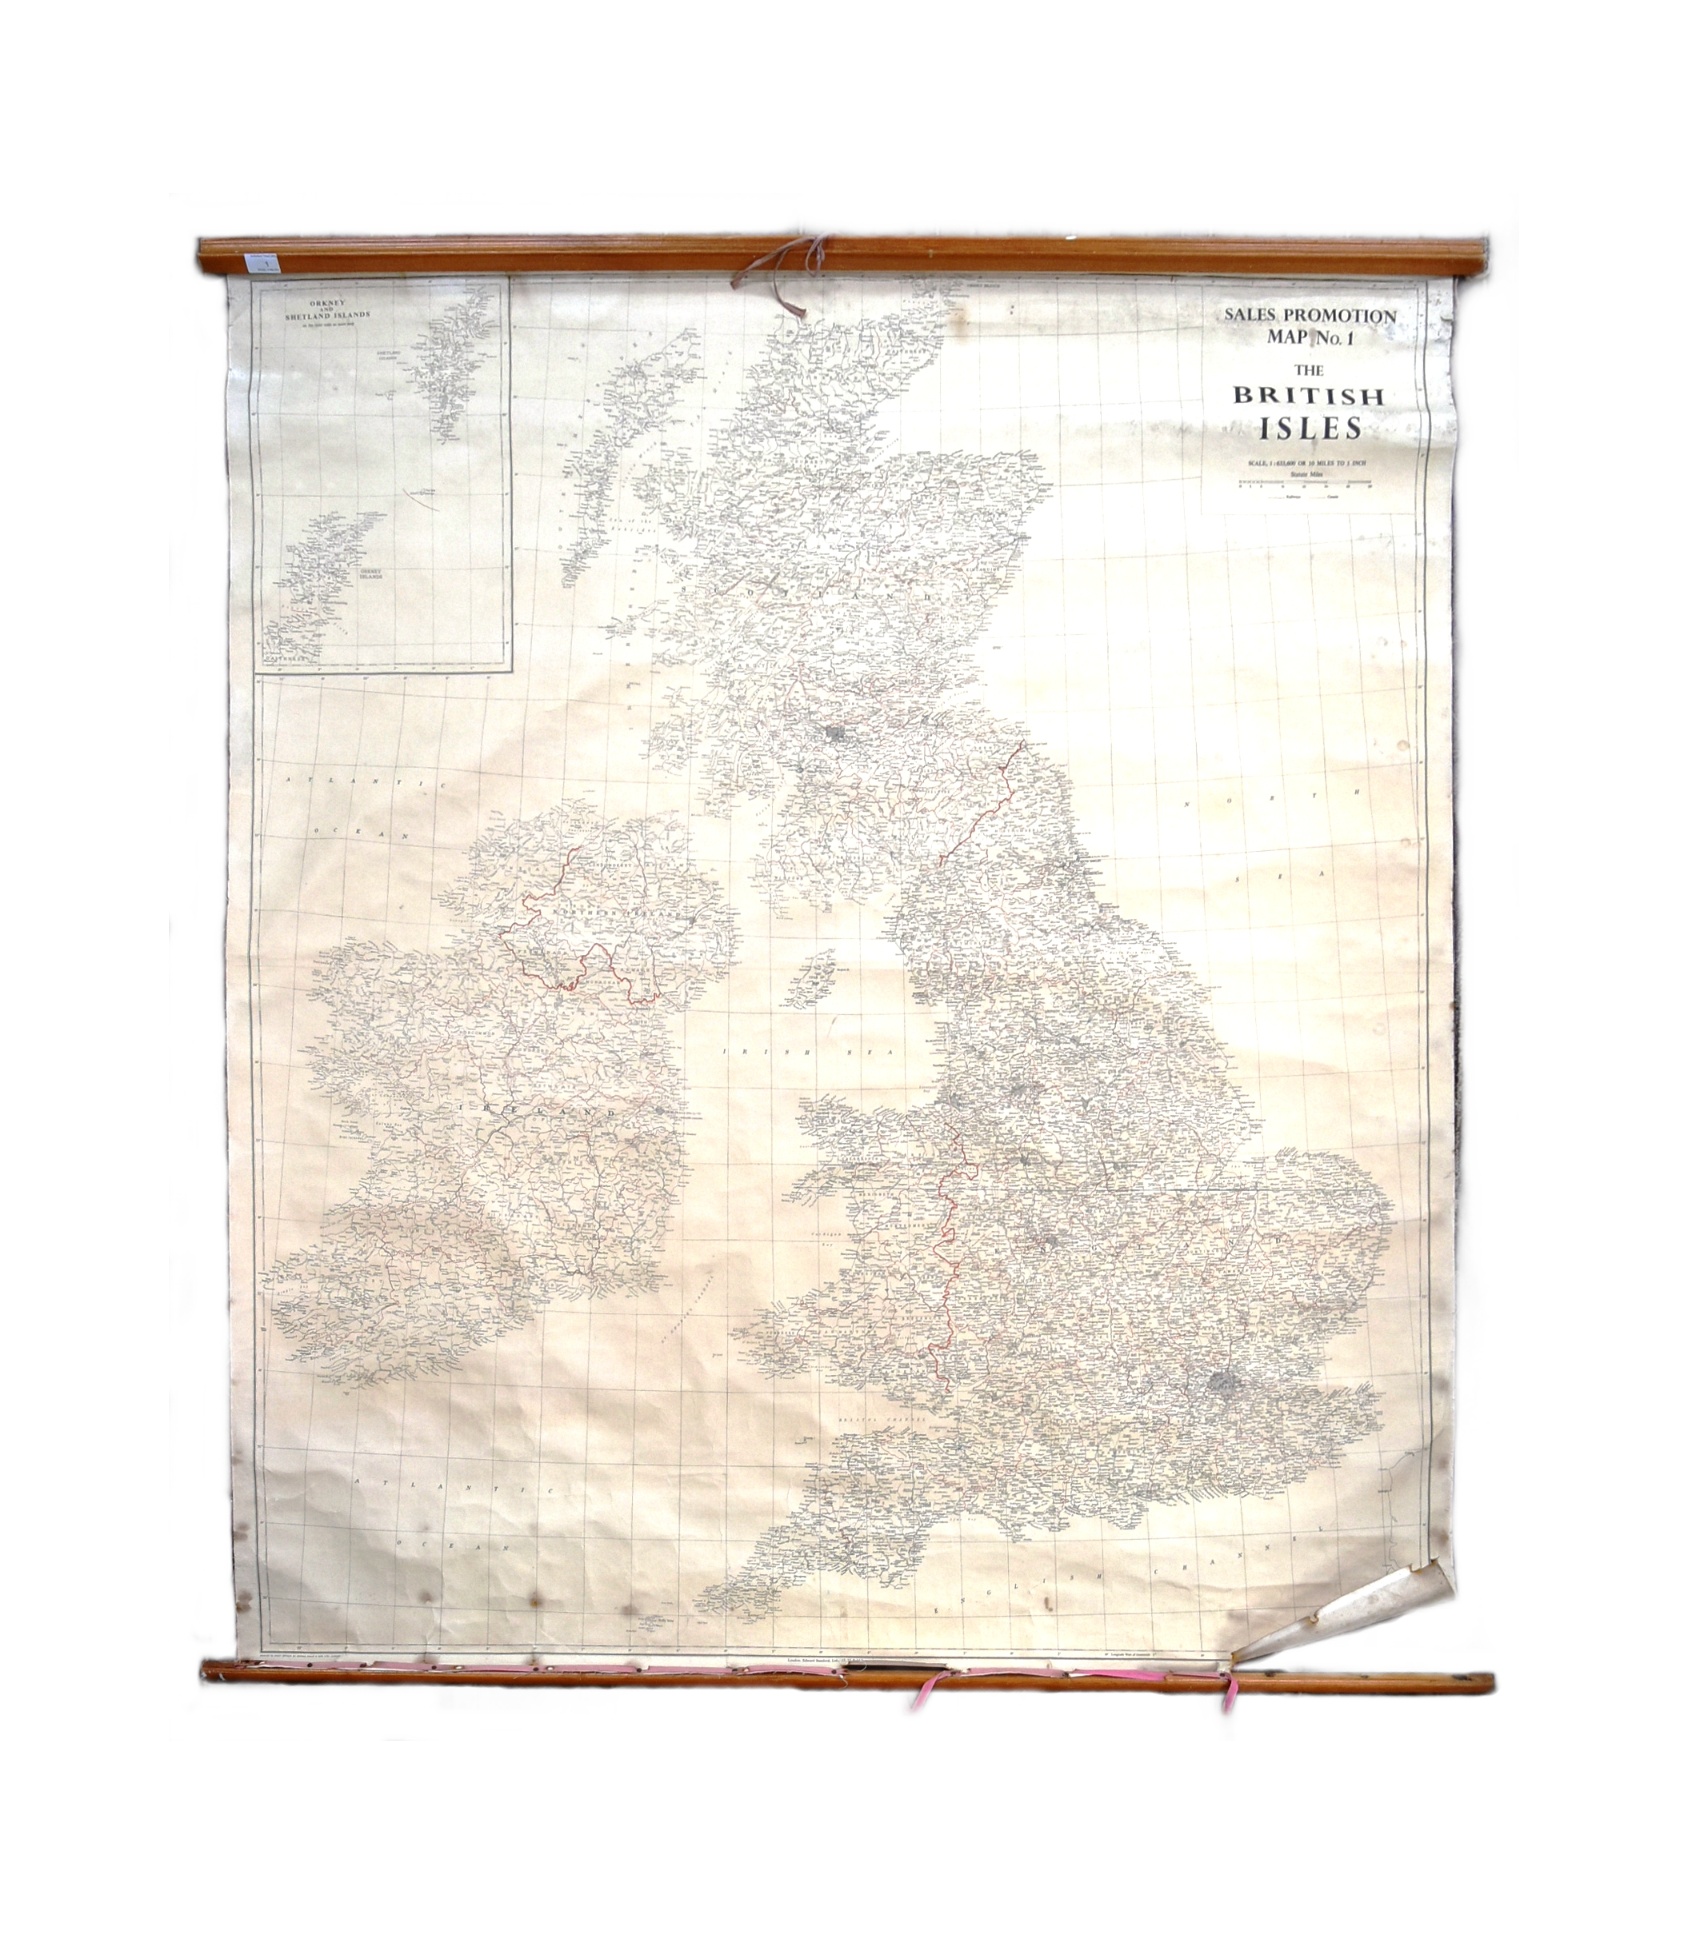 LARGE BRITISH ISLES SALE PROMOTION MAP